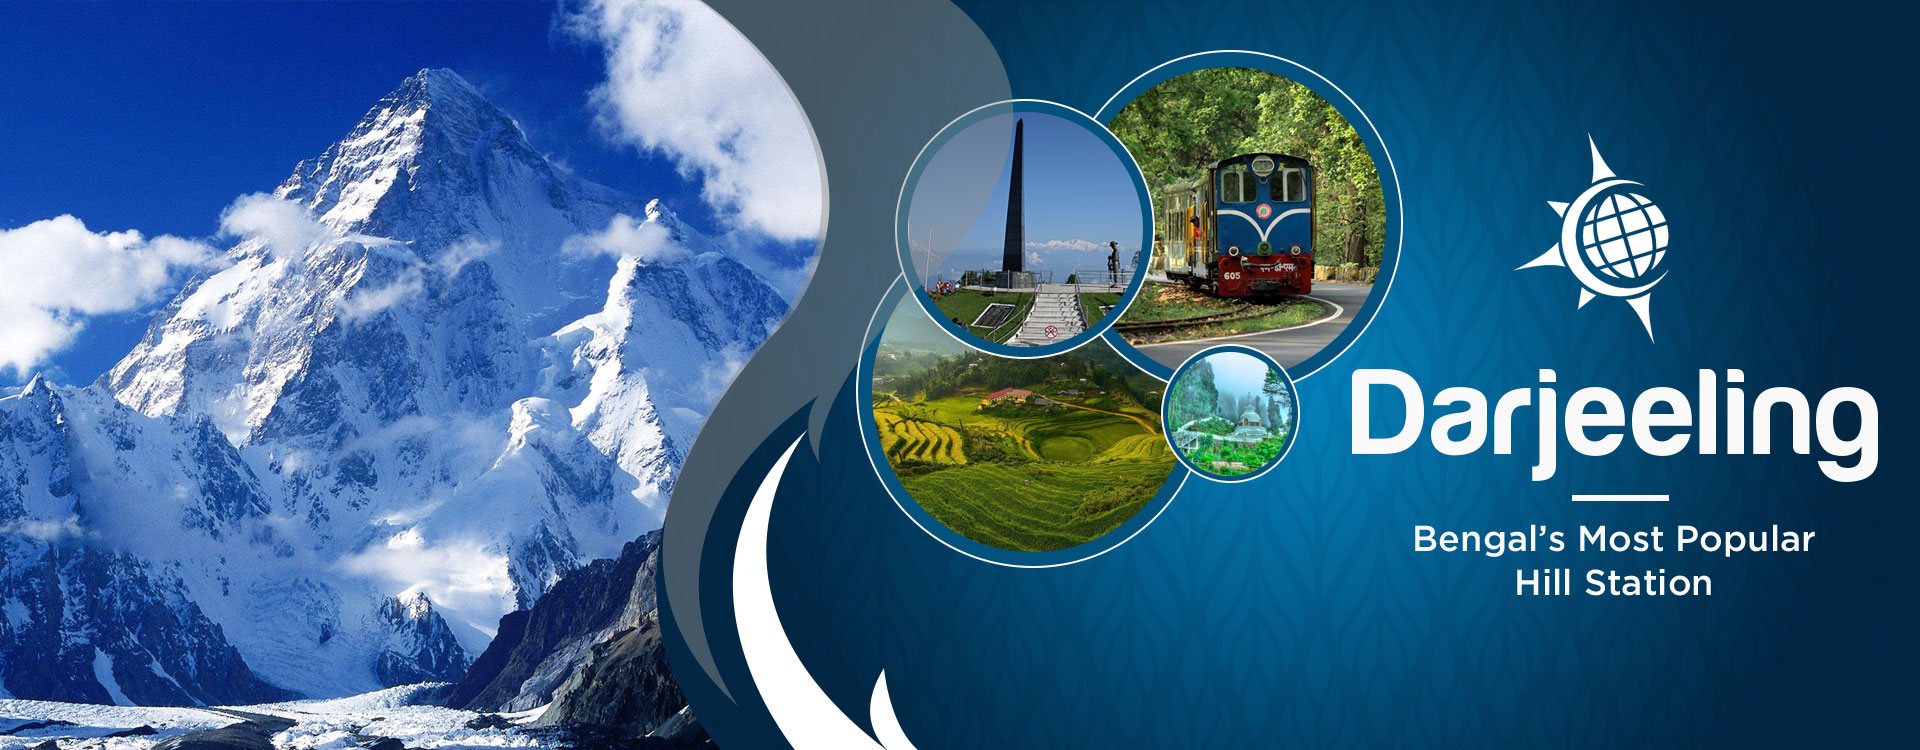 Tour Darjeeling With Disha Tours & Travel Agency